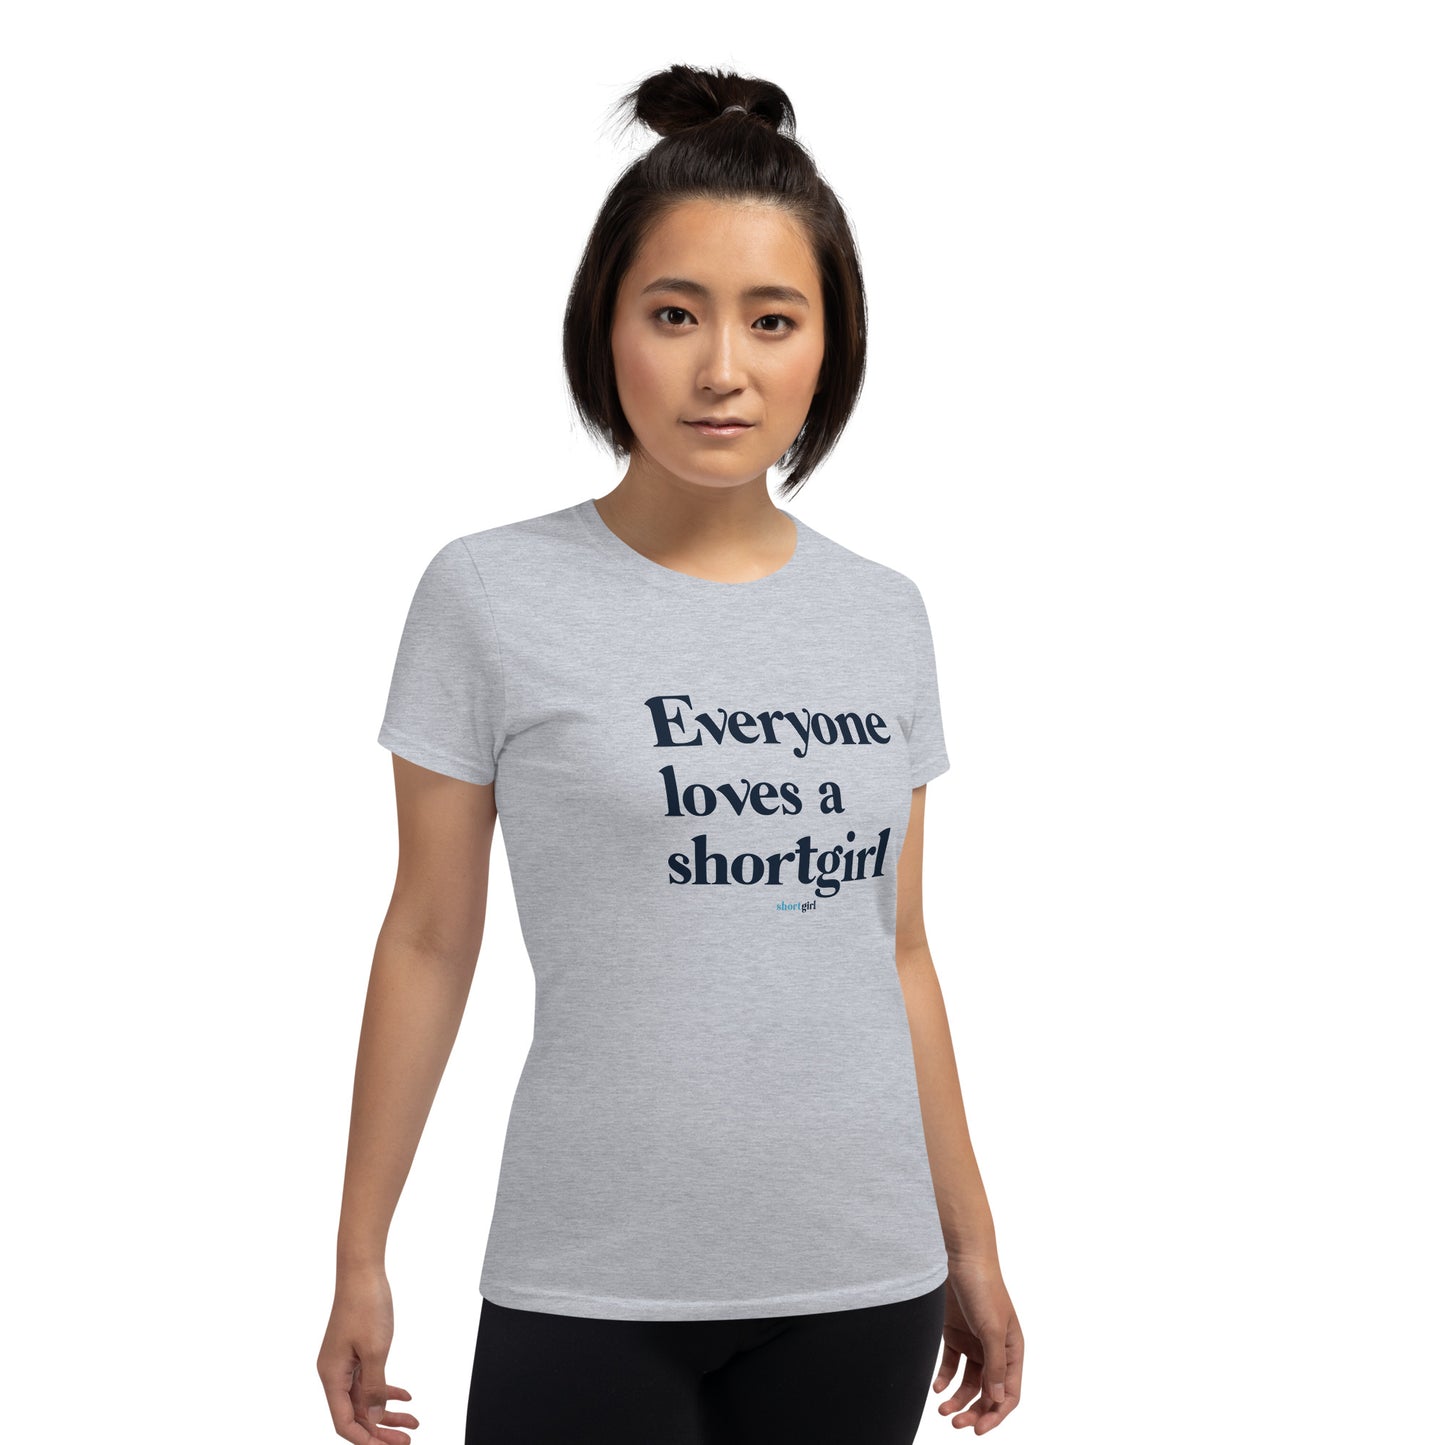 Women's short sleeve t-shirt - Everyone Loves a shortgirl